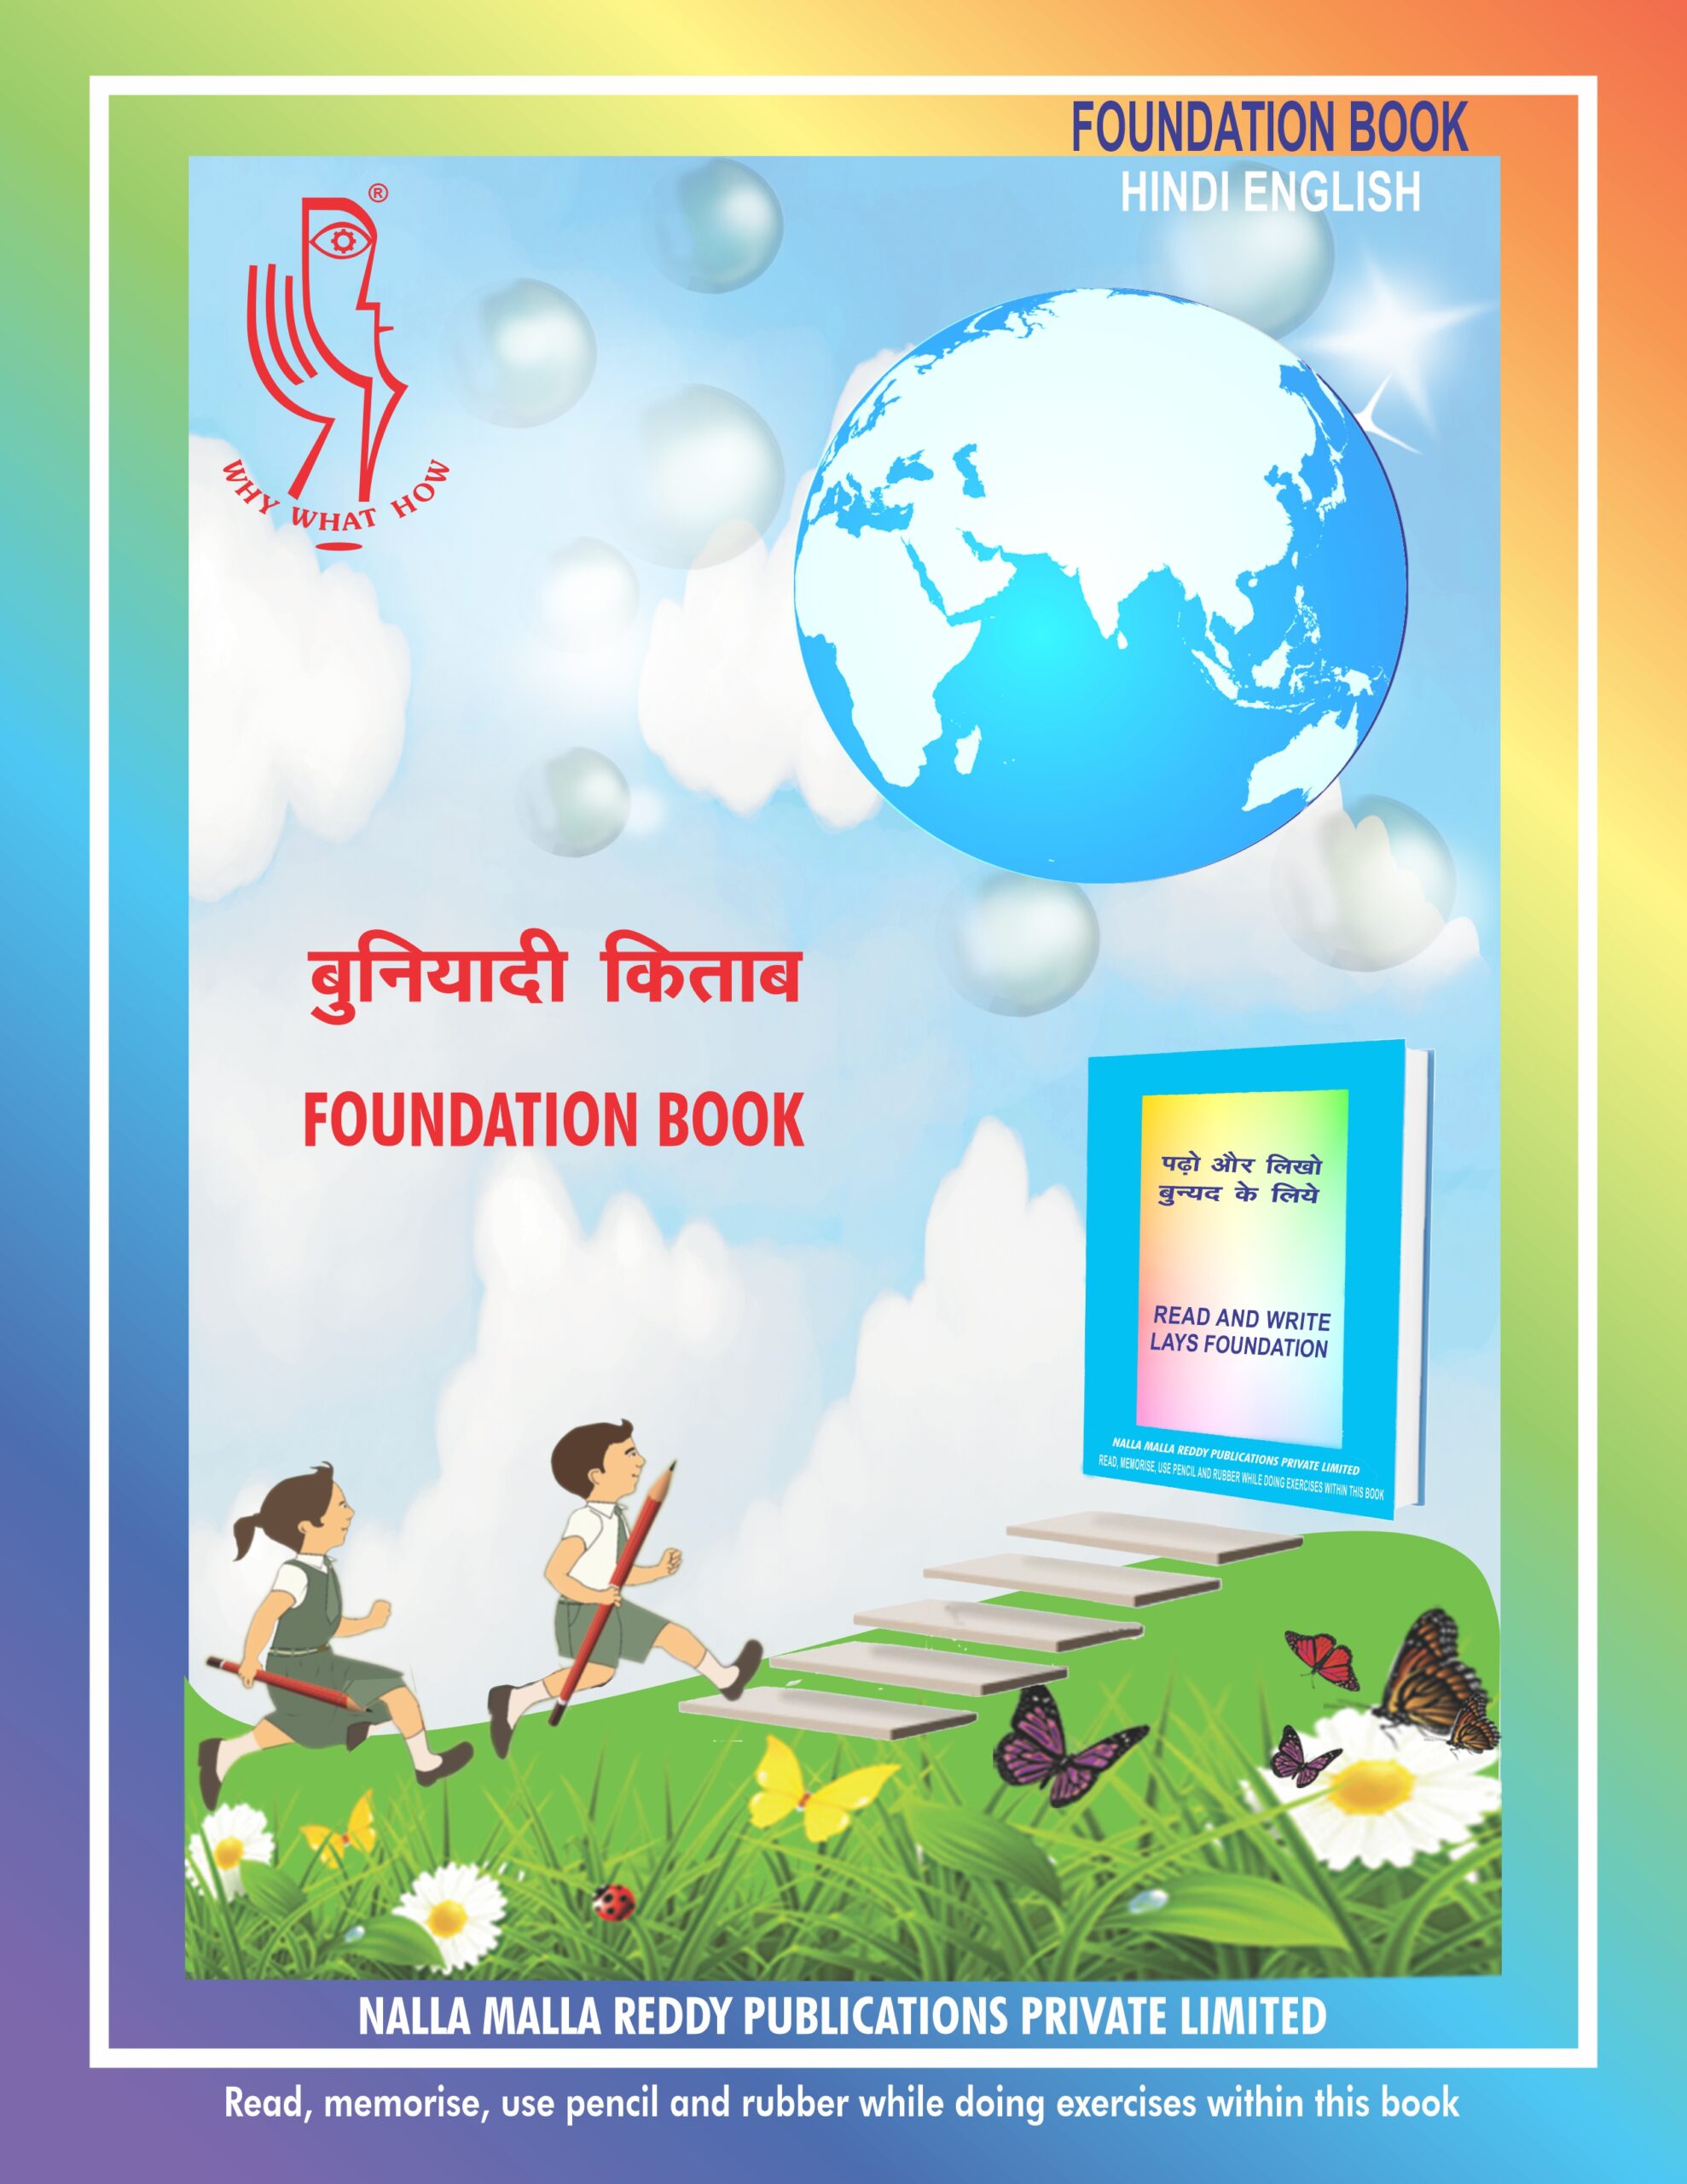 Hindi English Foundation Book Tittle